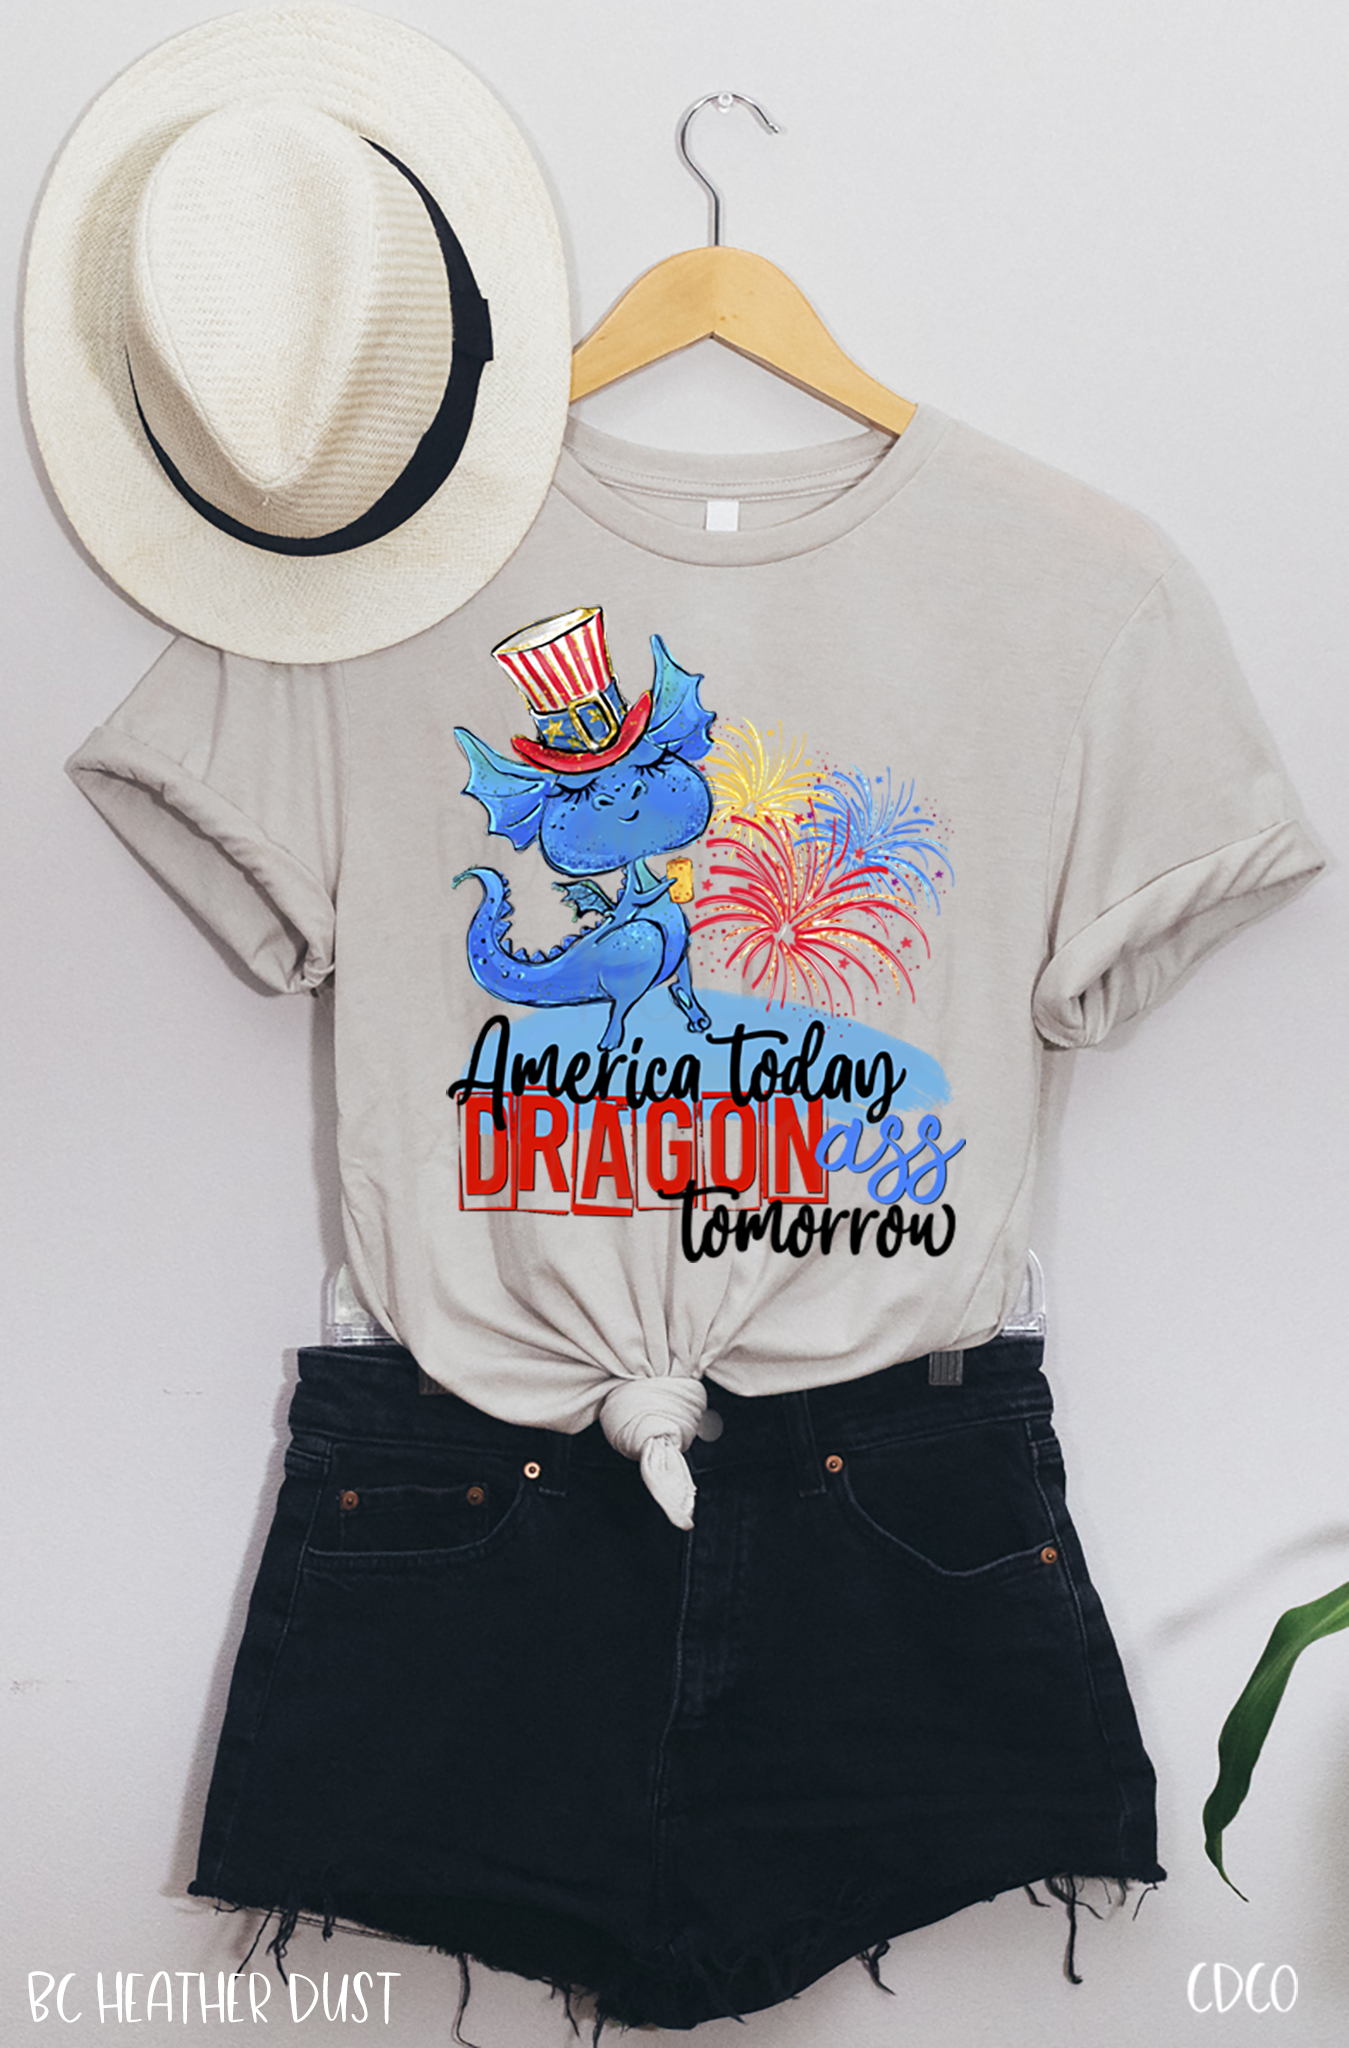 America Today Dragon Ass Tomorrow (350°-375°)